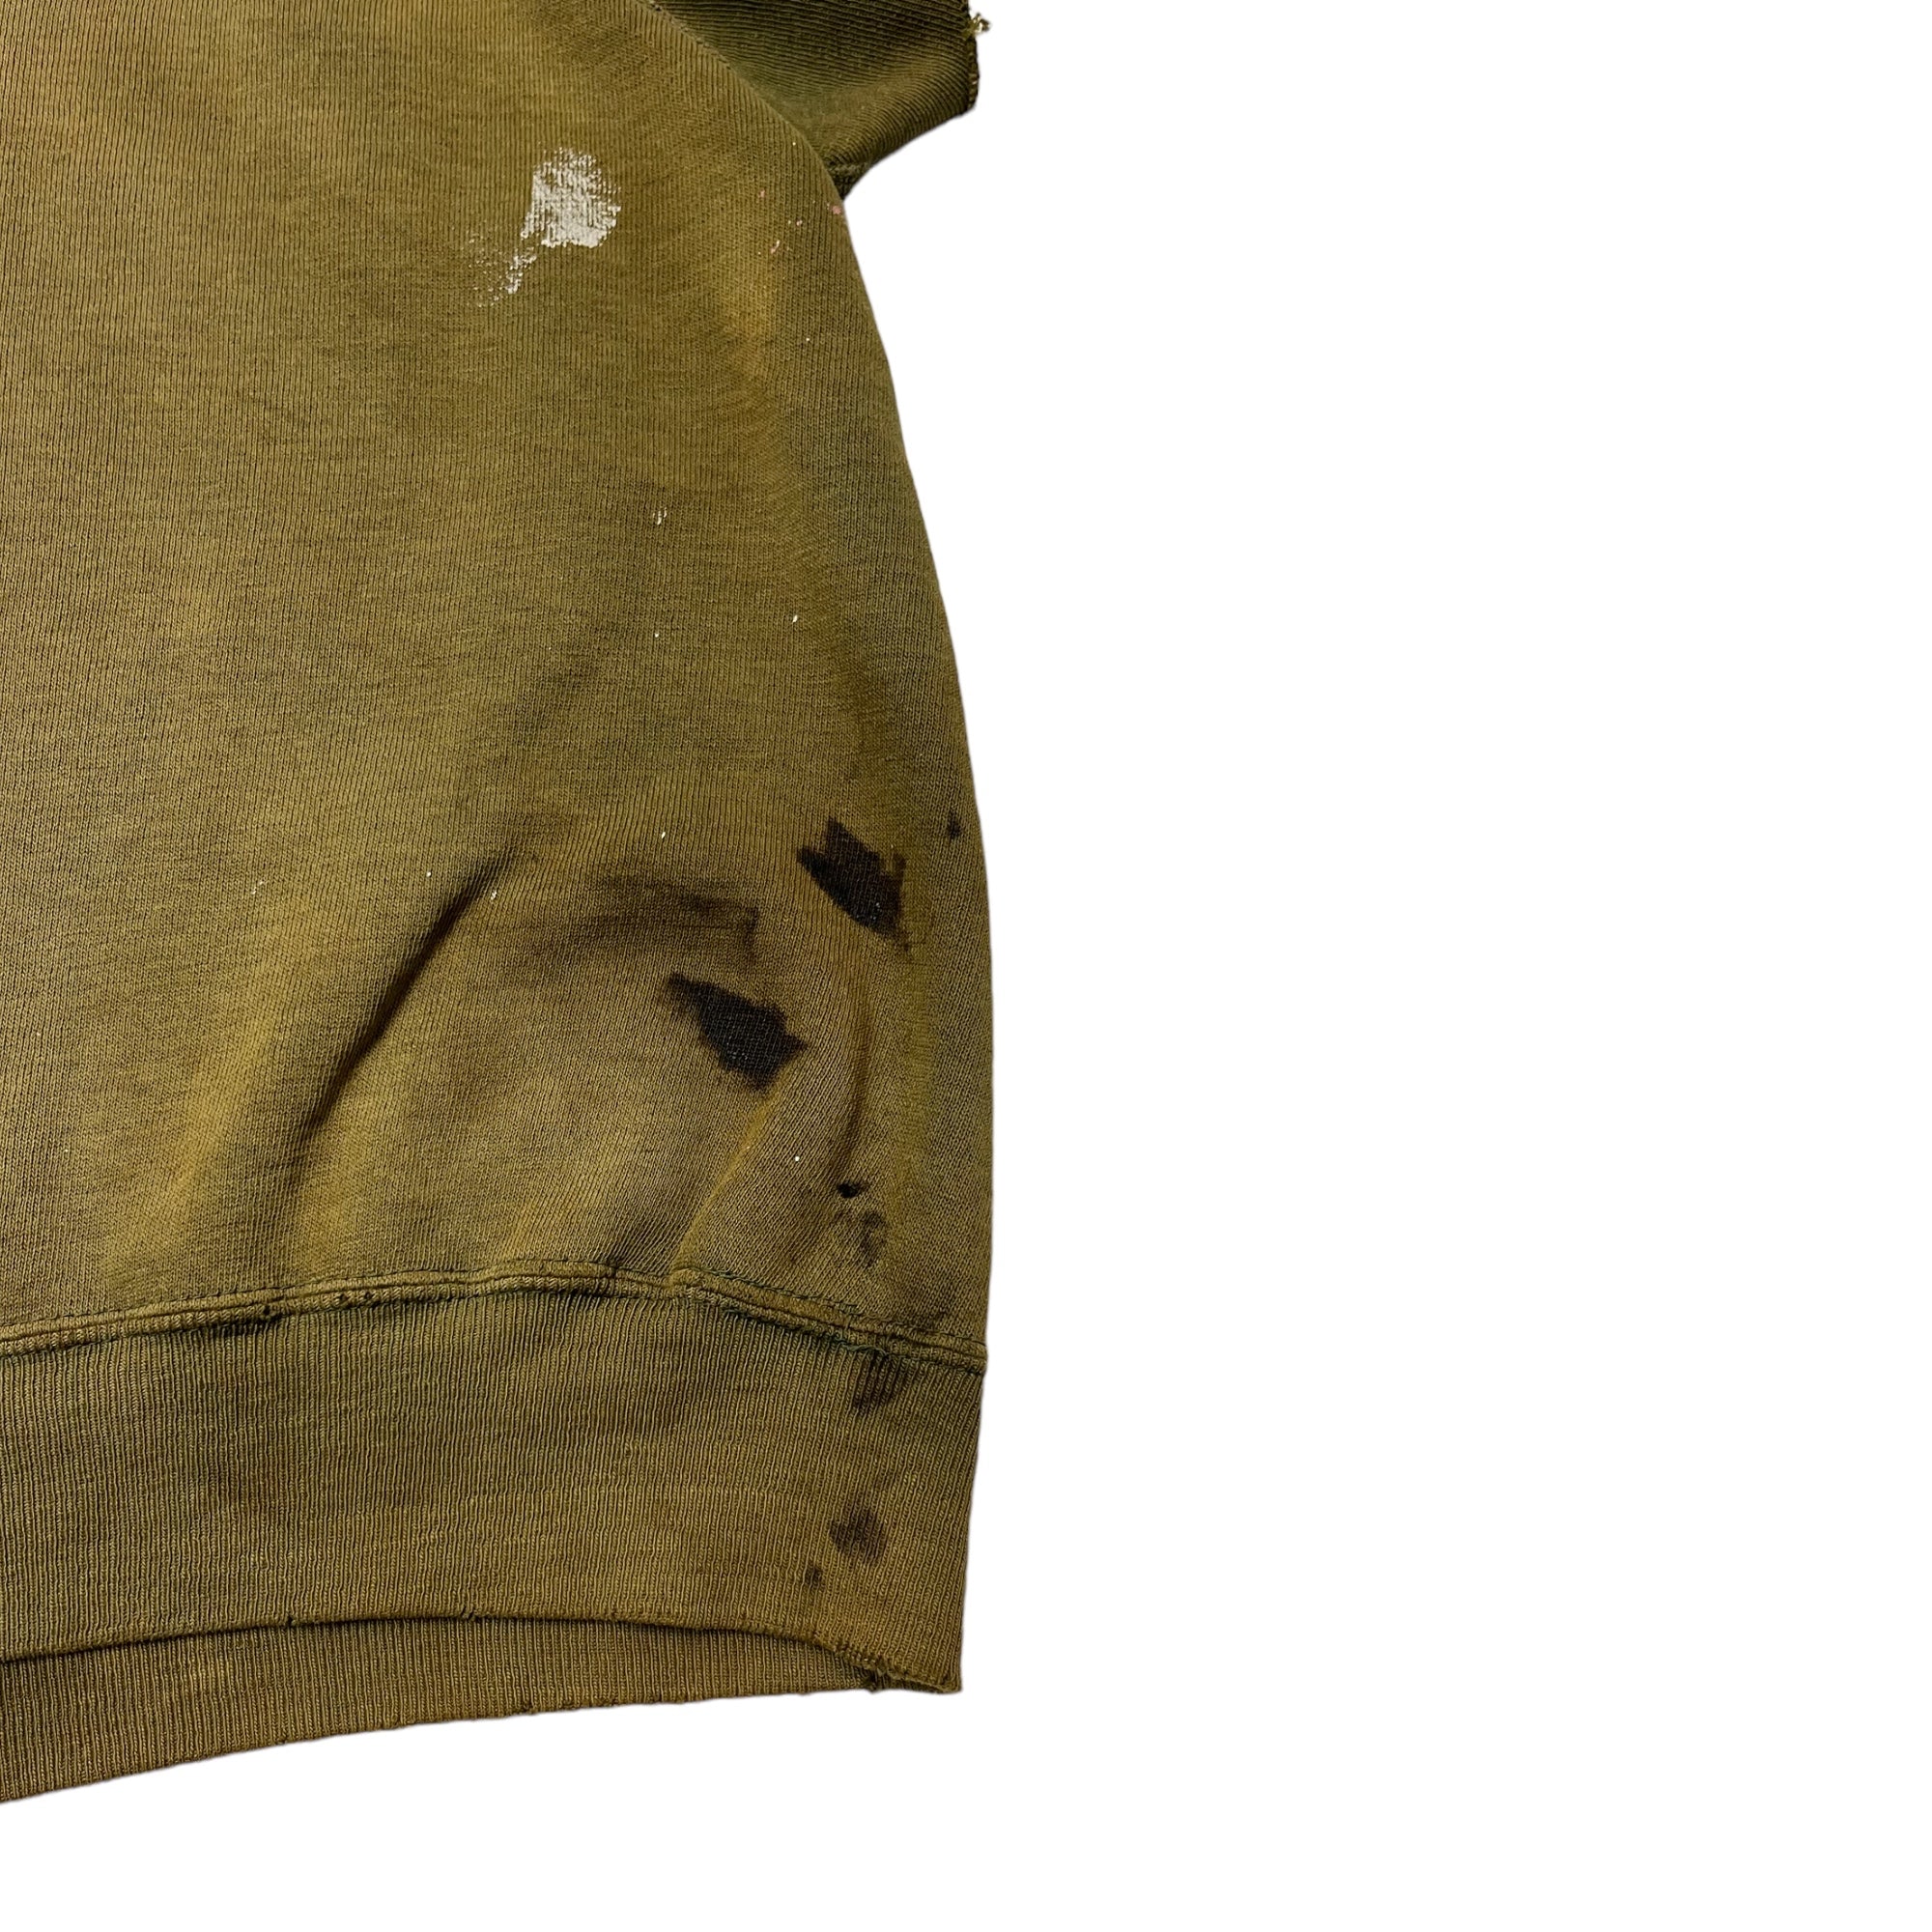 Early ‘60s Lewiston-Porter Lancers Flock Graphic Thrashed Cutoff Crewneck Sweatshirt - Faded Olive - M/L